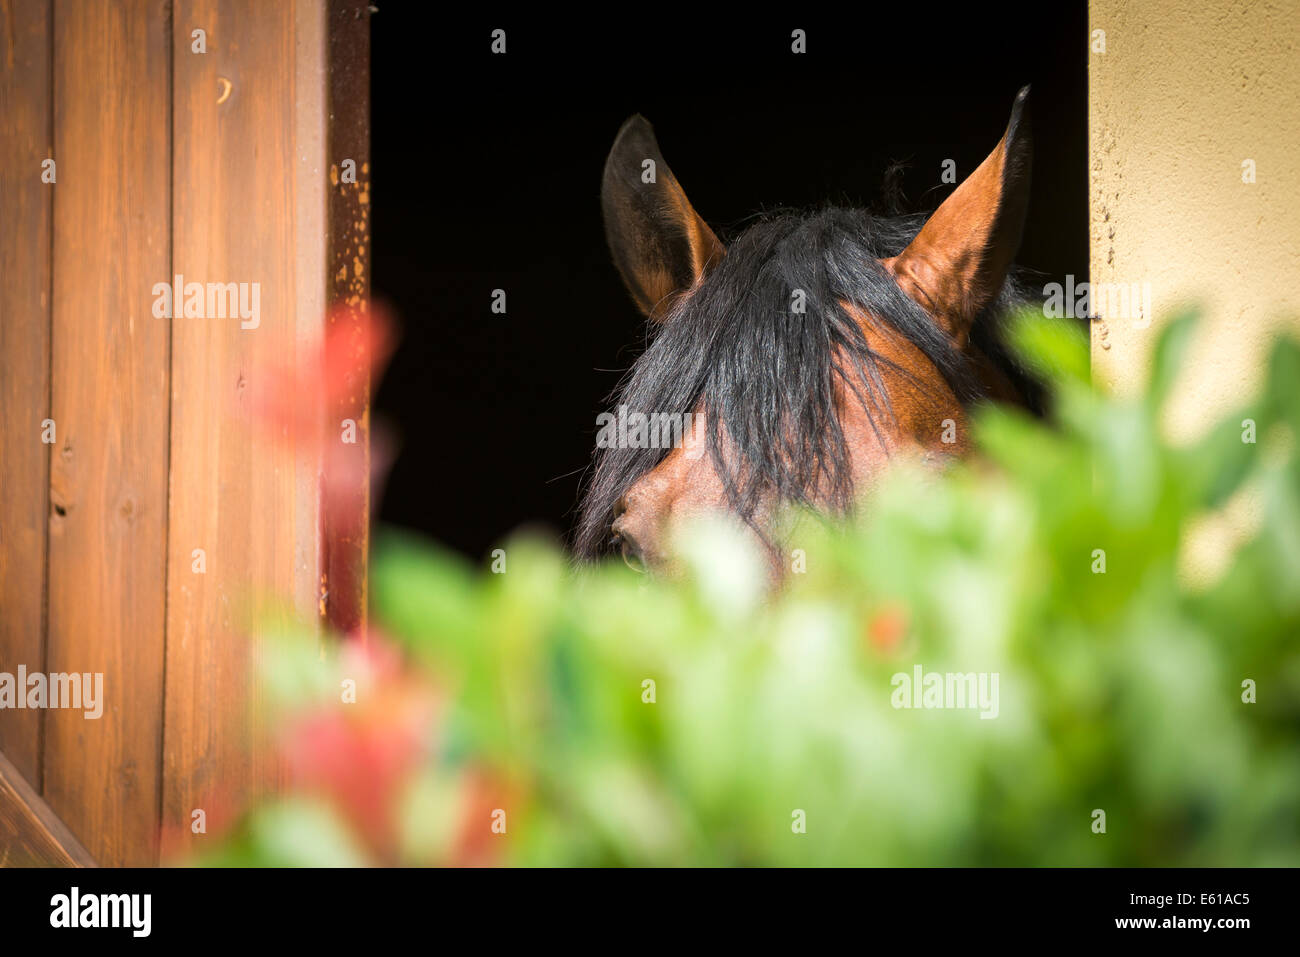 Horse at window Stock Photo